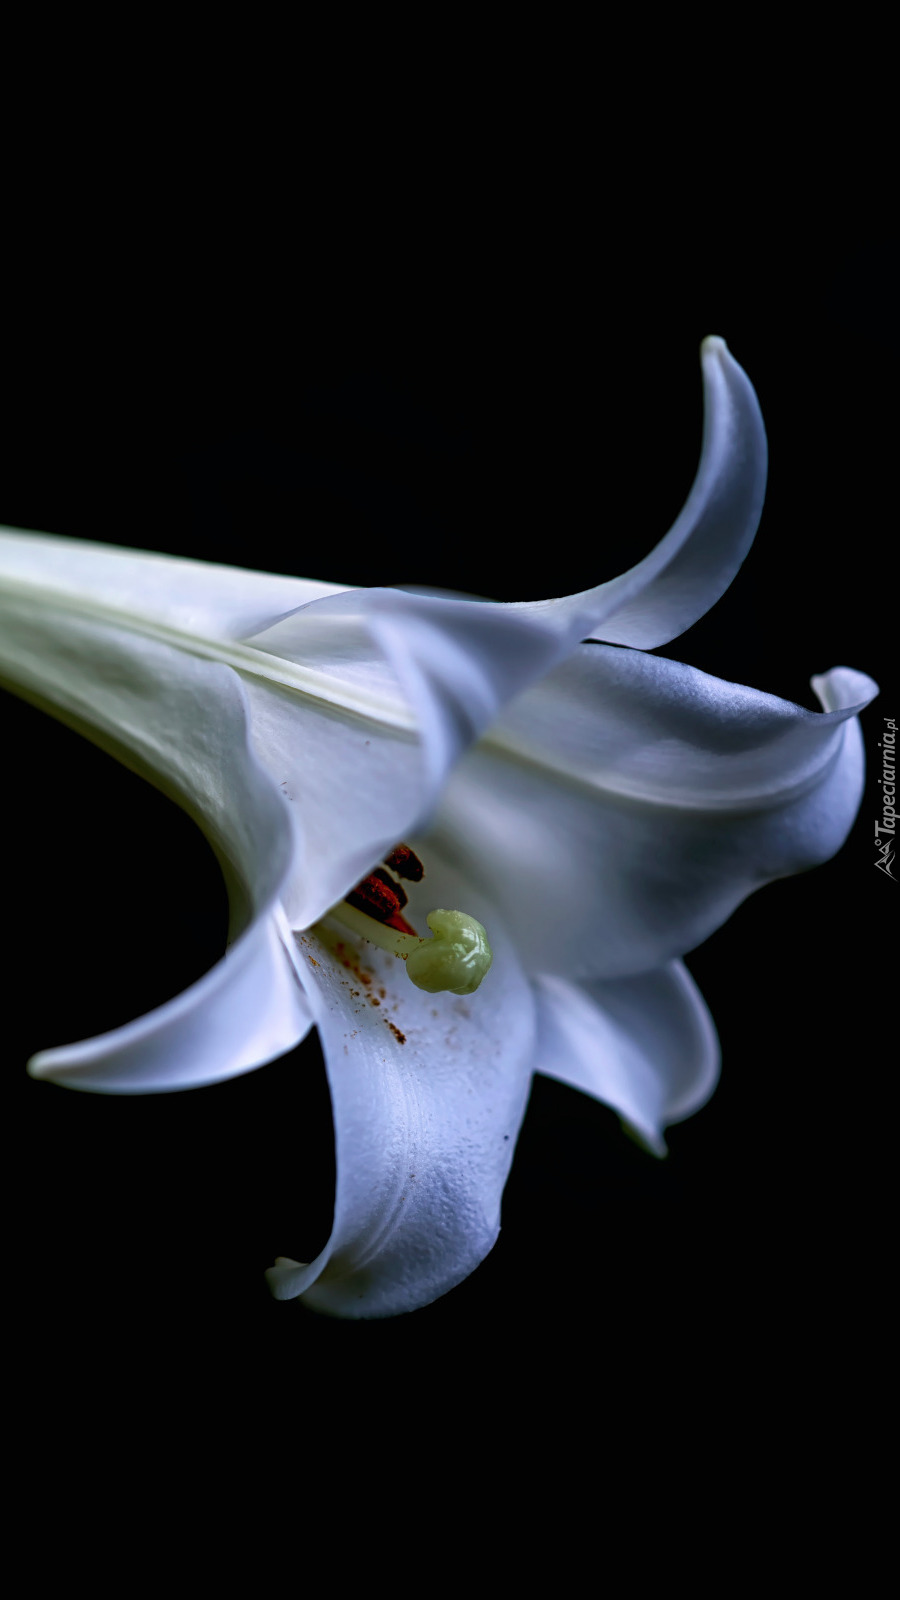 Biała lilia